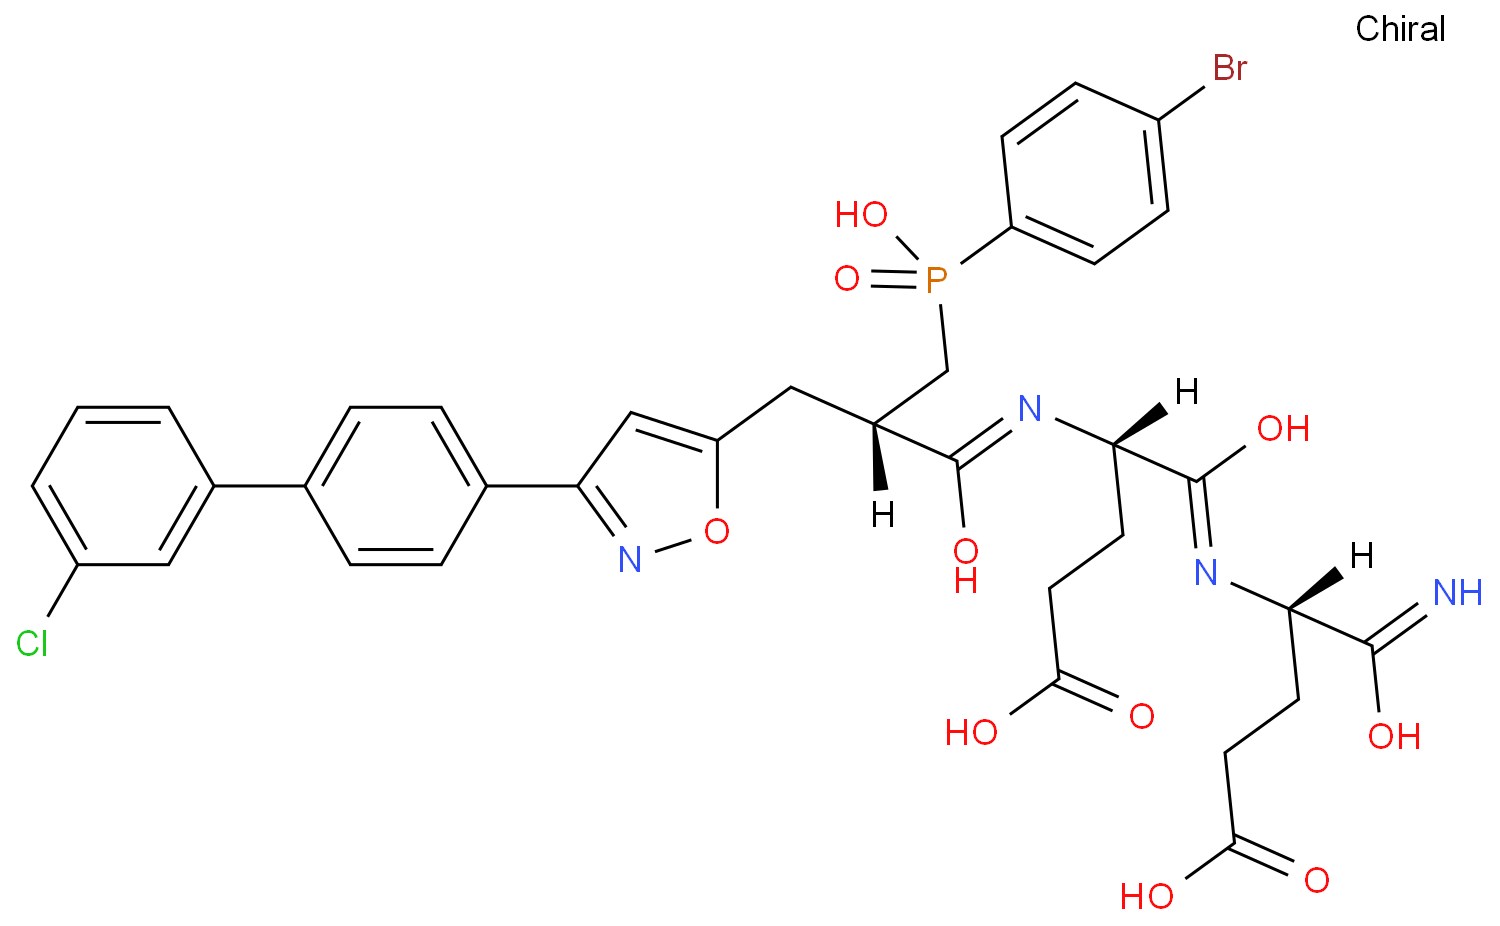 Alanyl-glutamine - Wikipedia